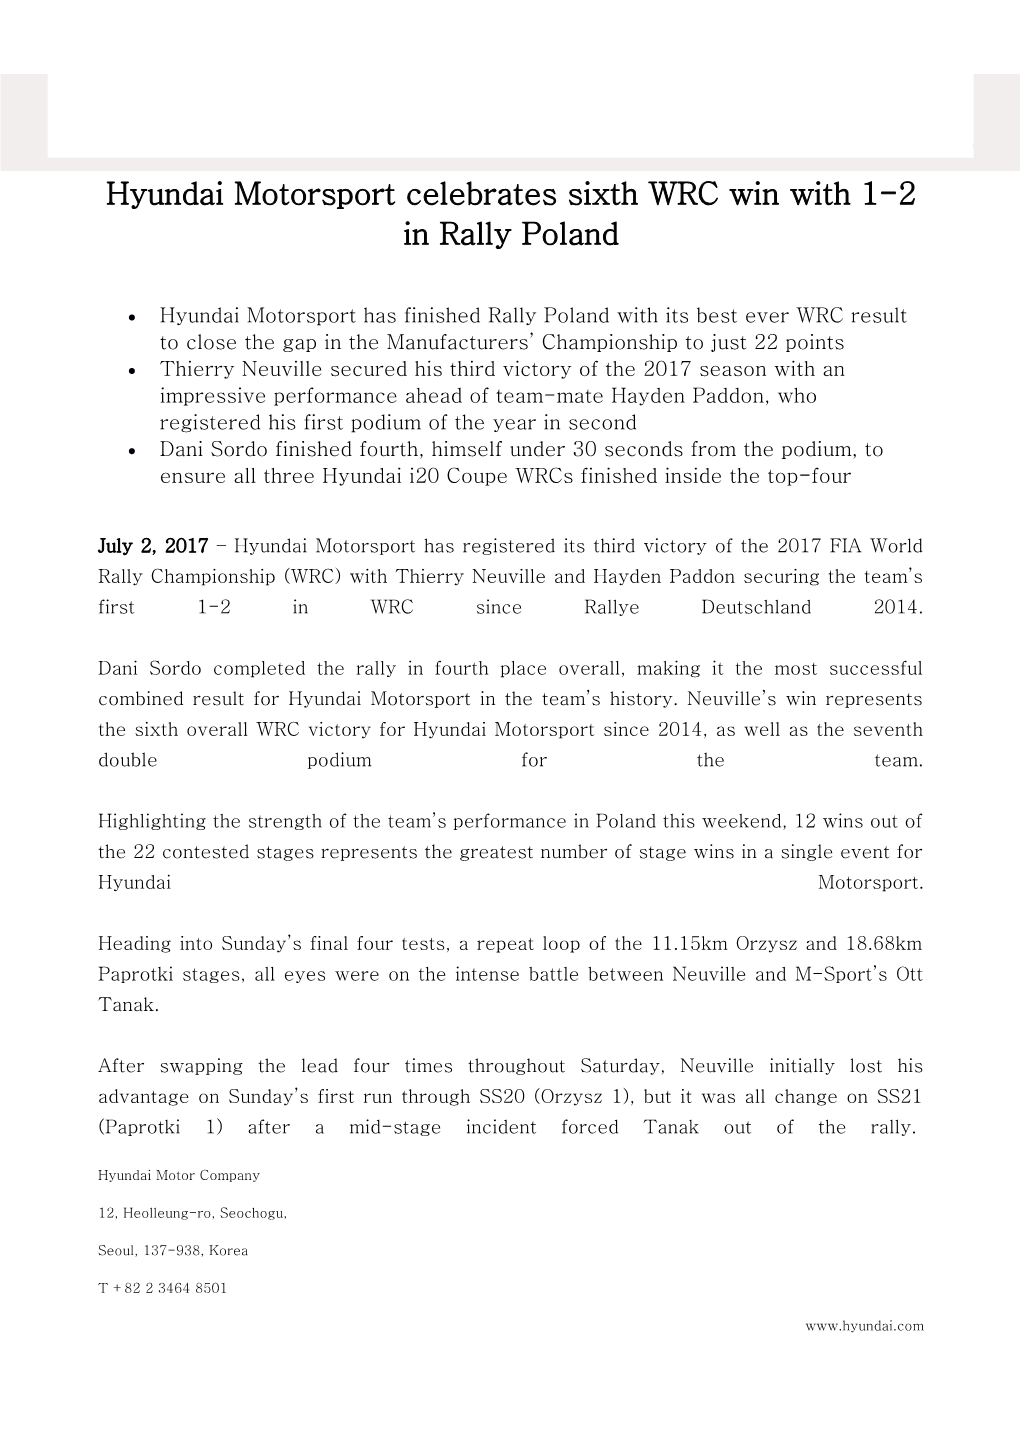 Hyundai Motorsport Celebrates Sixth WRC Win with 1-2 in Rally Poland